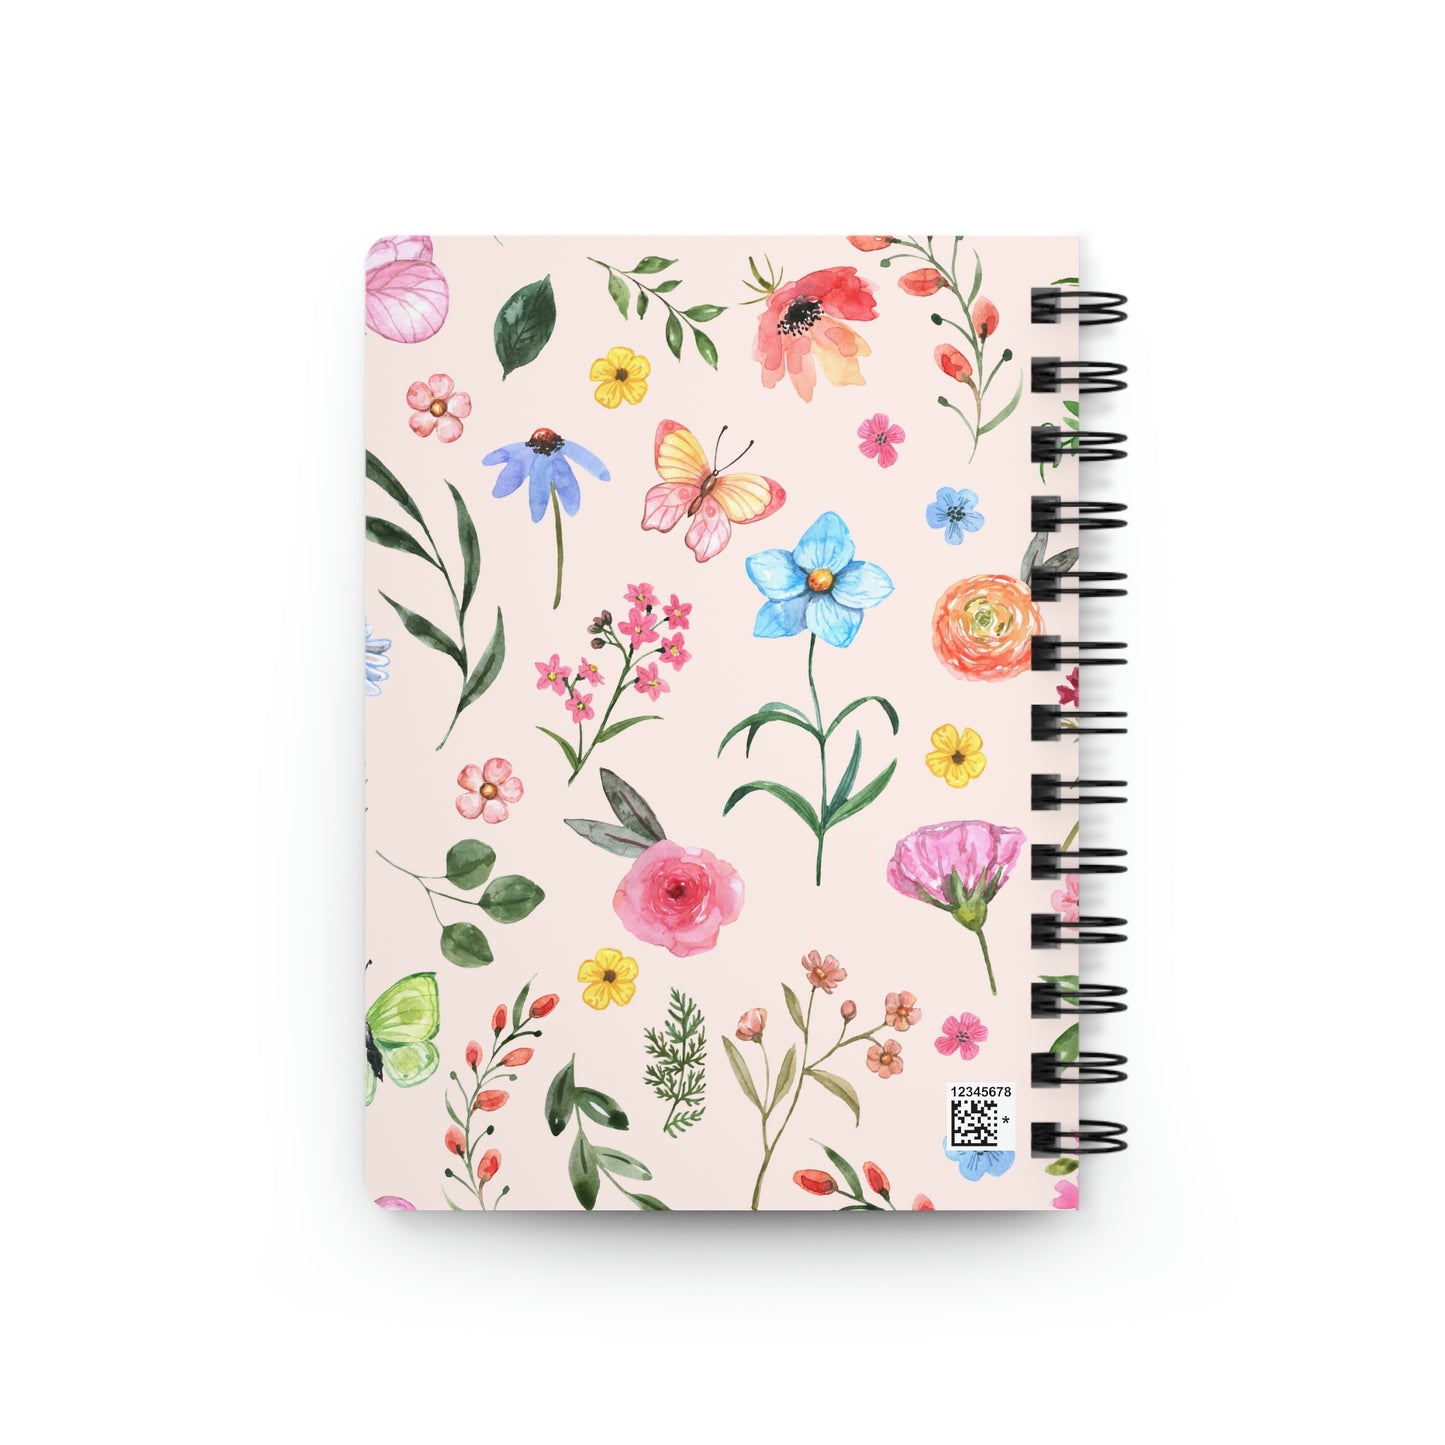 Spring Daisies and Butterflies Spiral Bound Journal